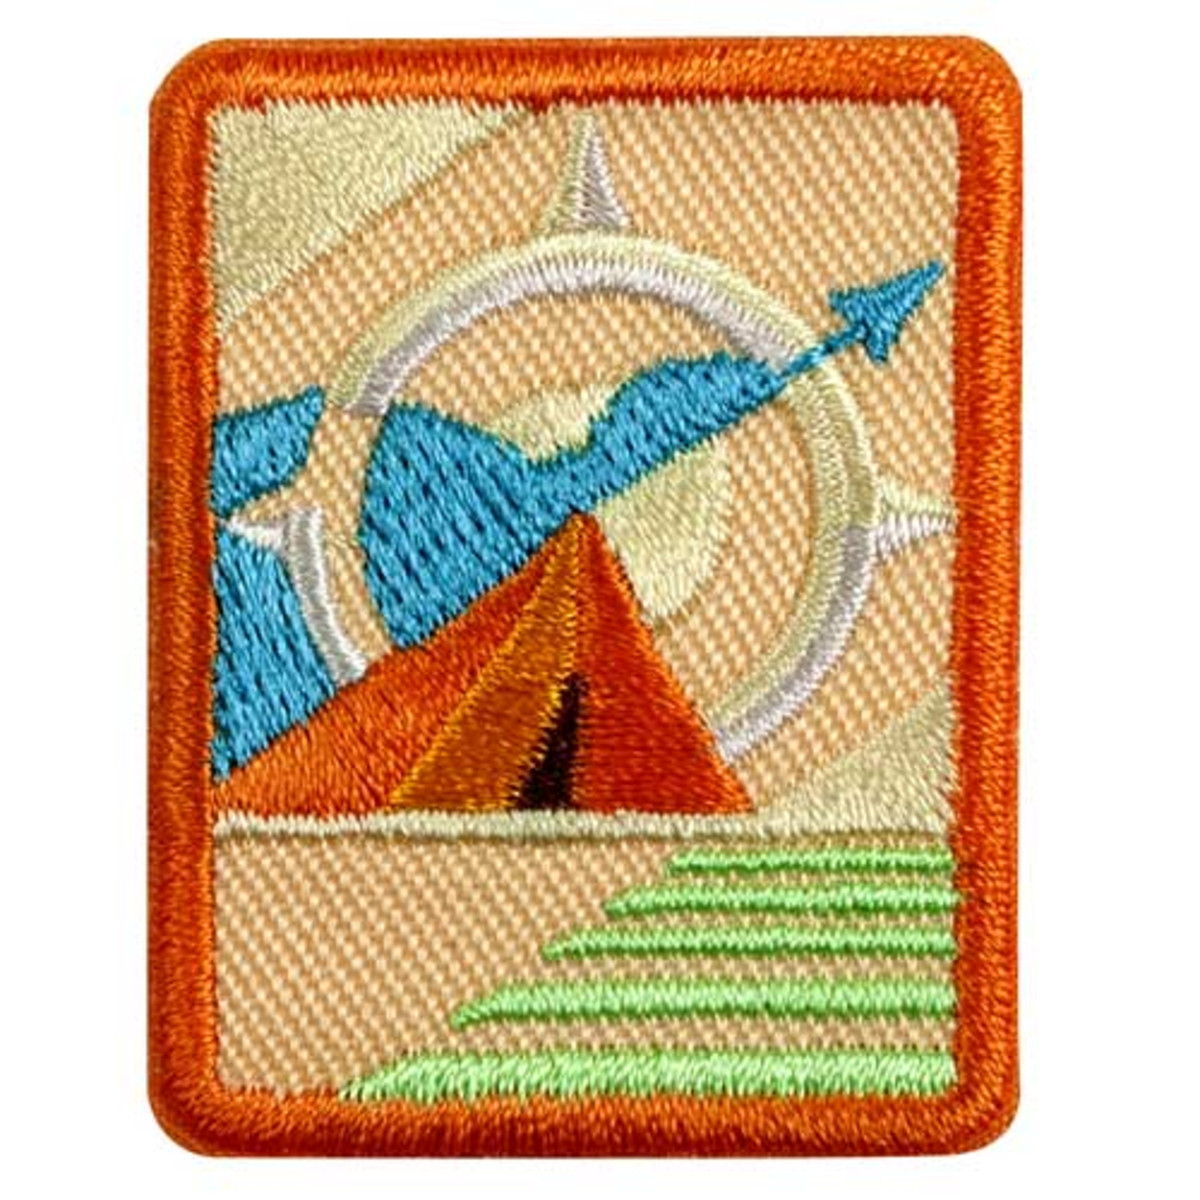 Adventurer Badge